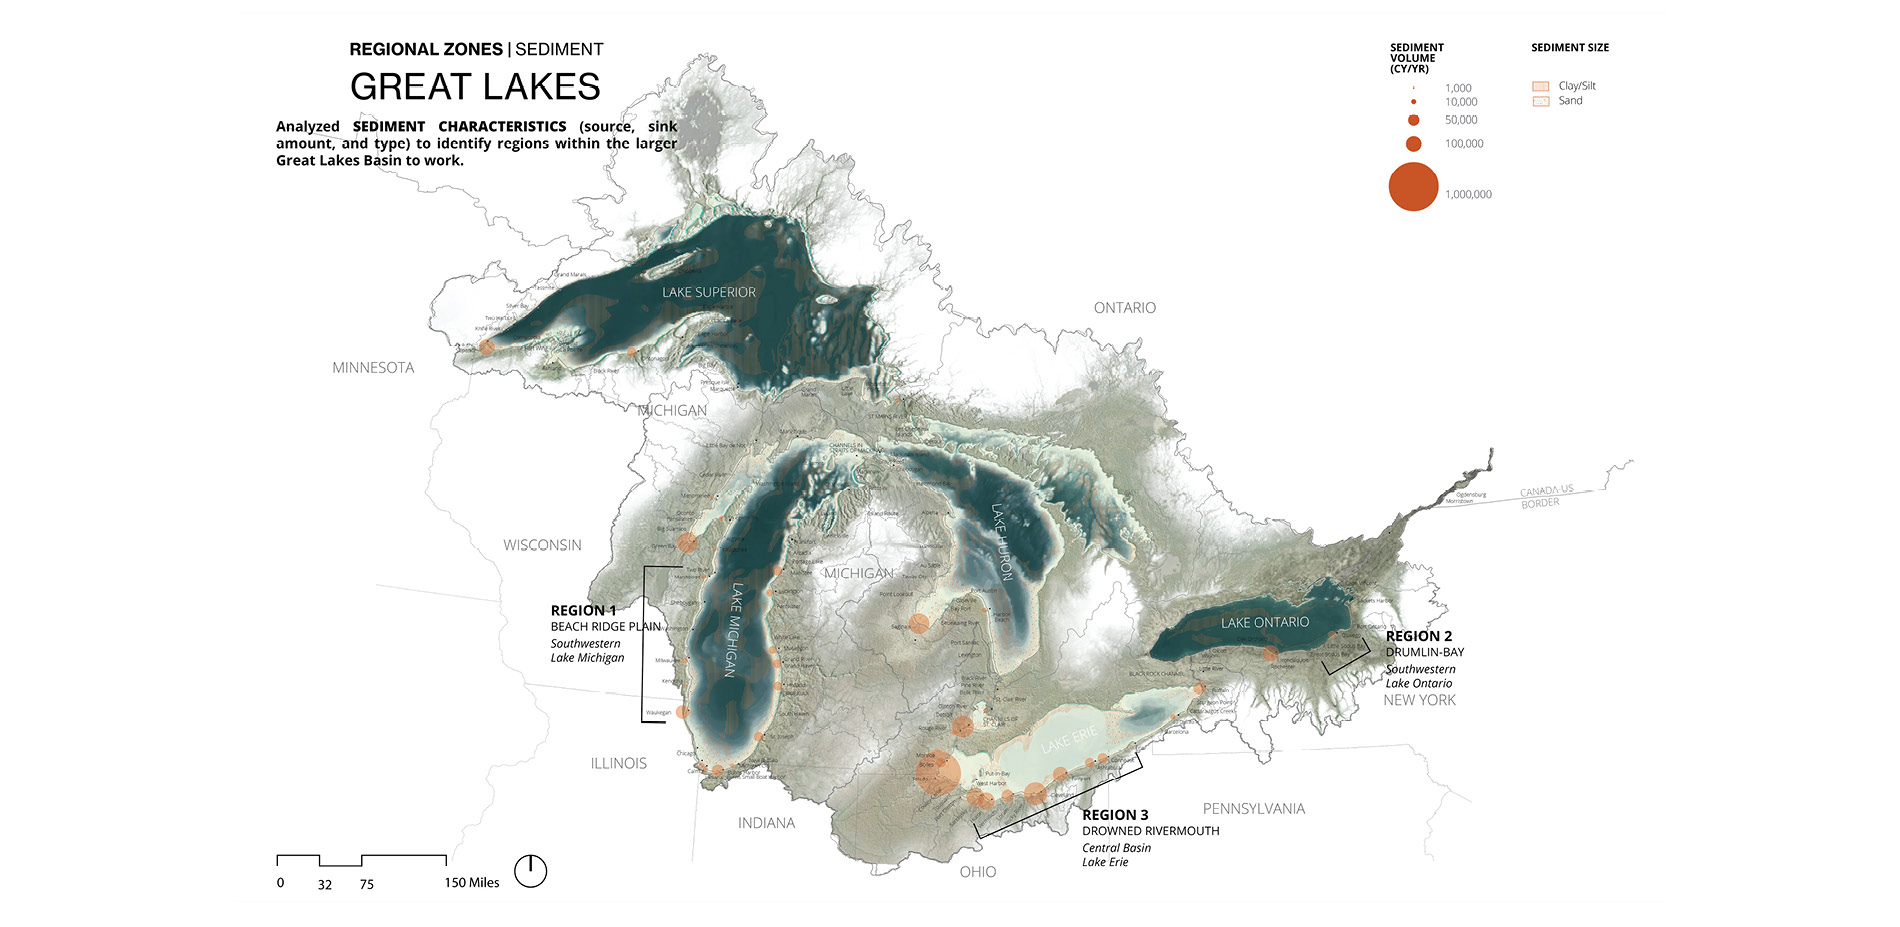 Great Lakes Basin: Sediments